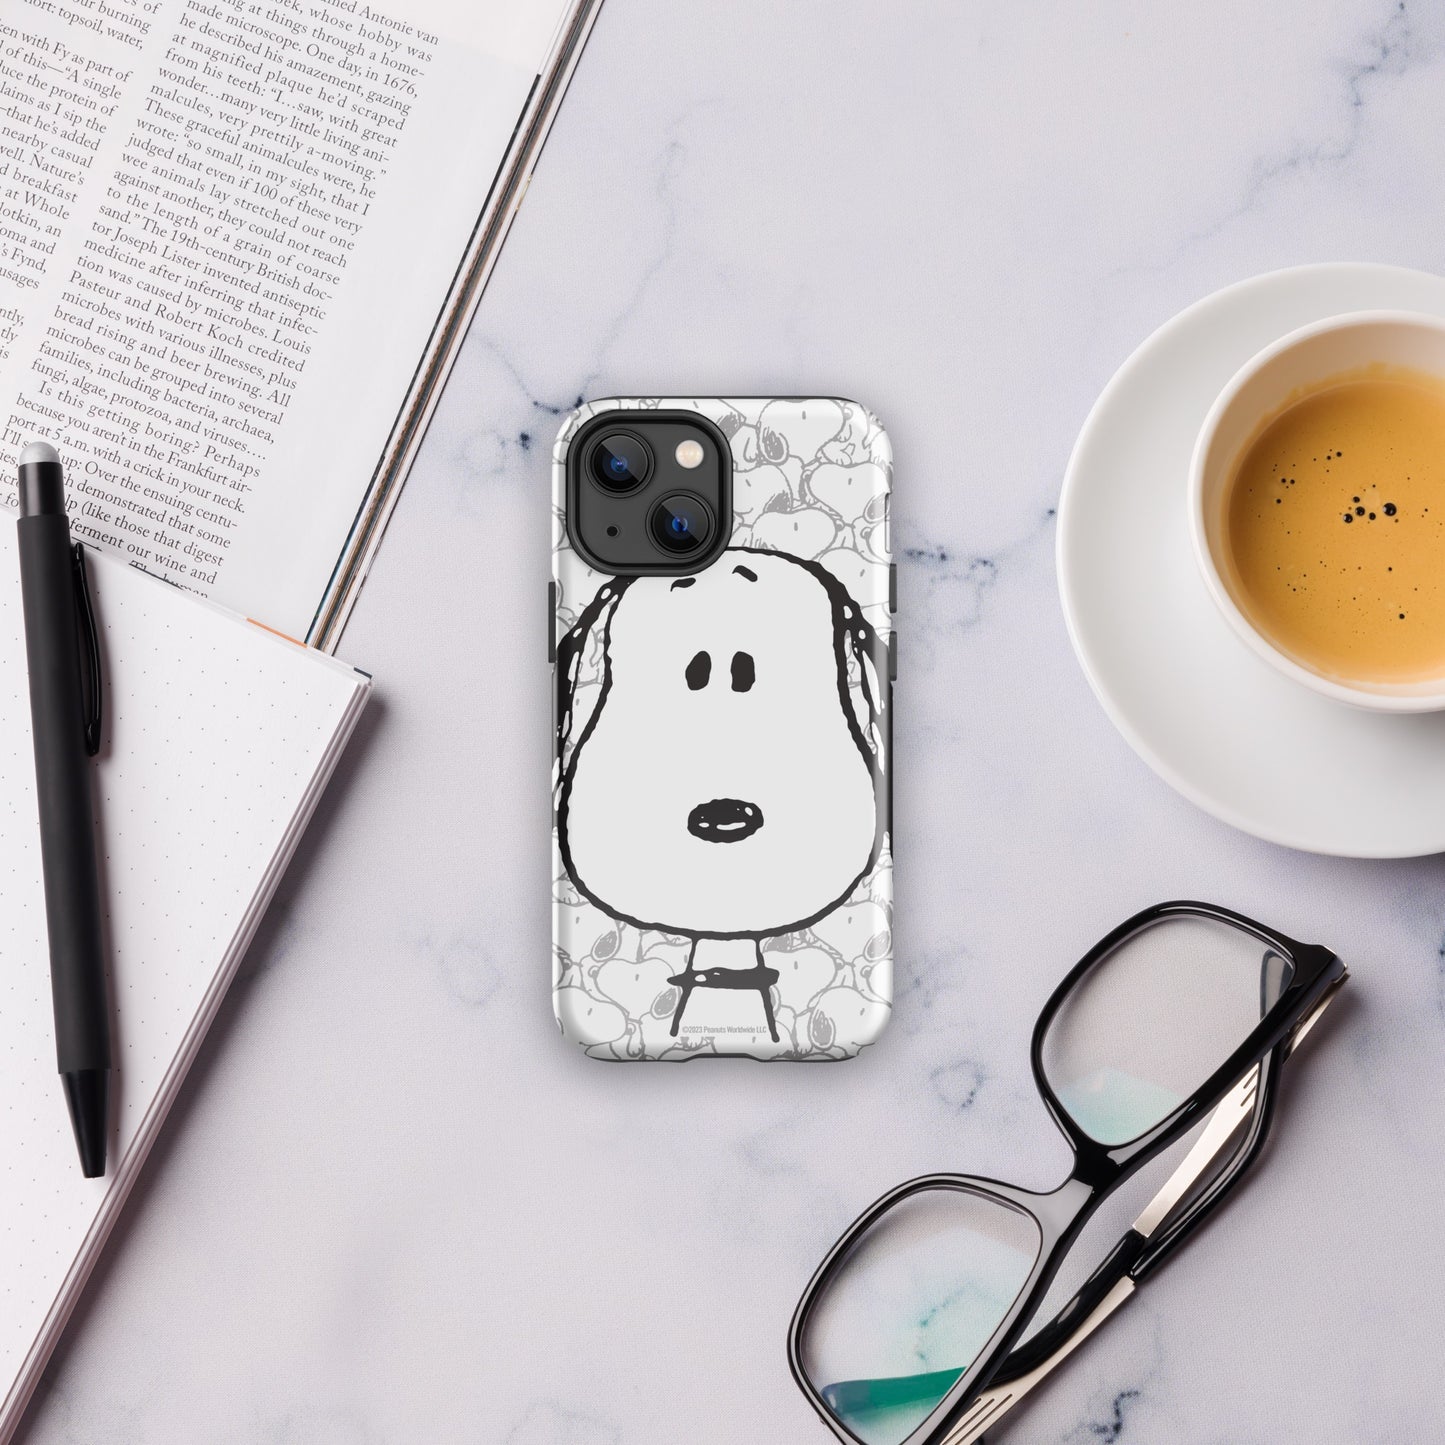 Snoopy iPhone Tough Case